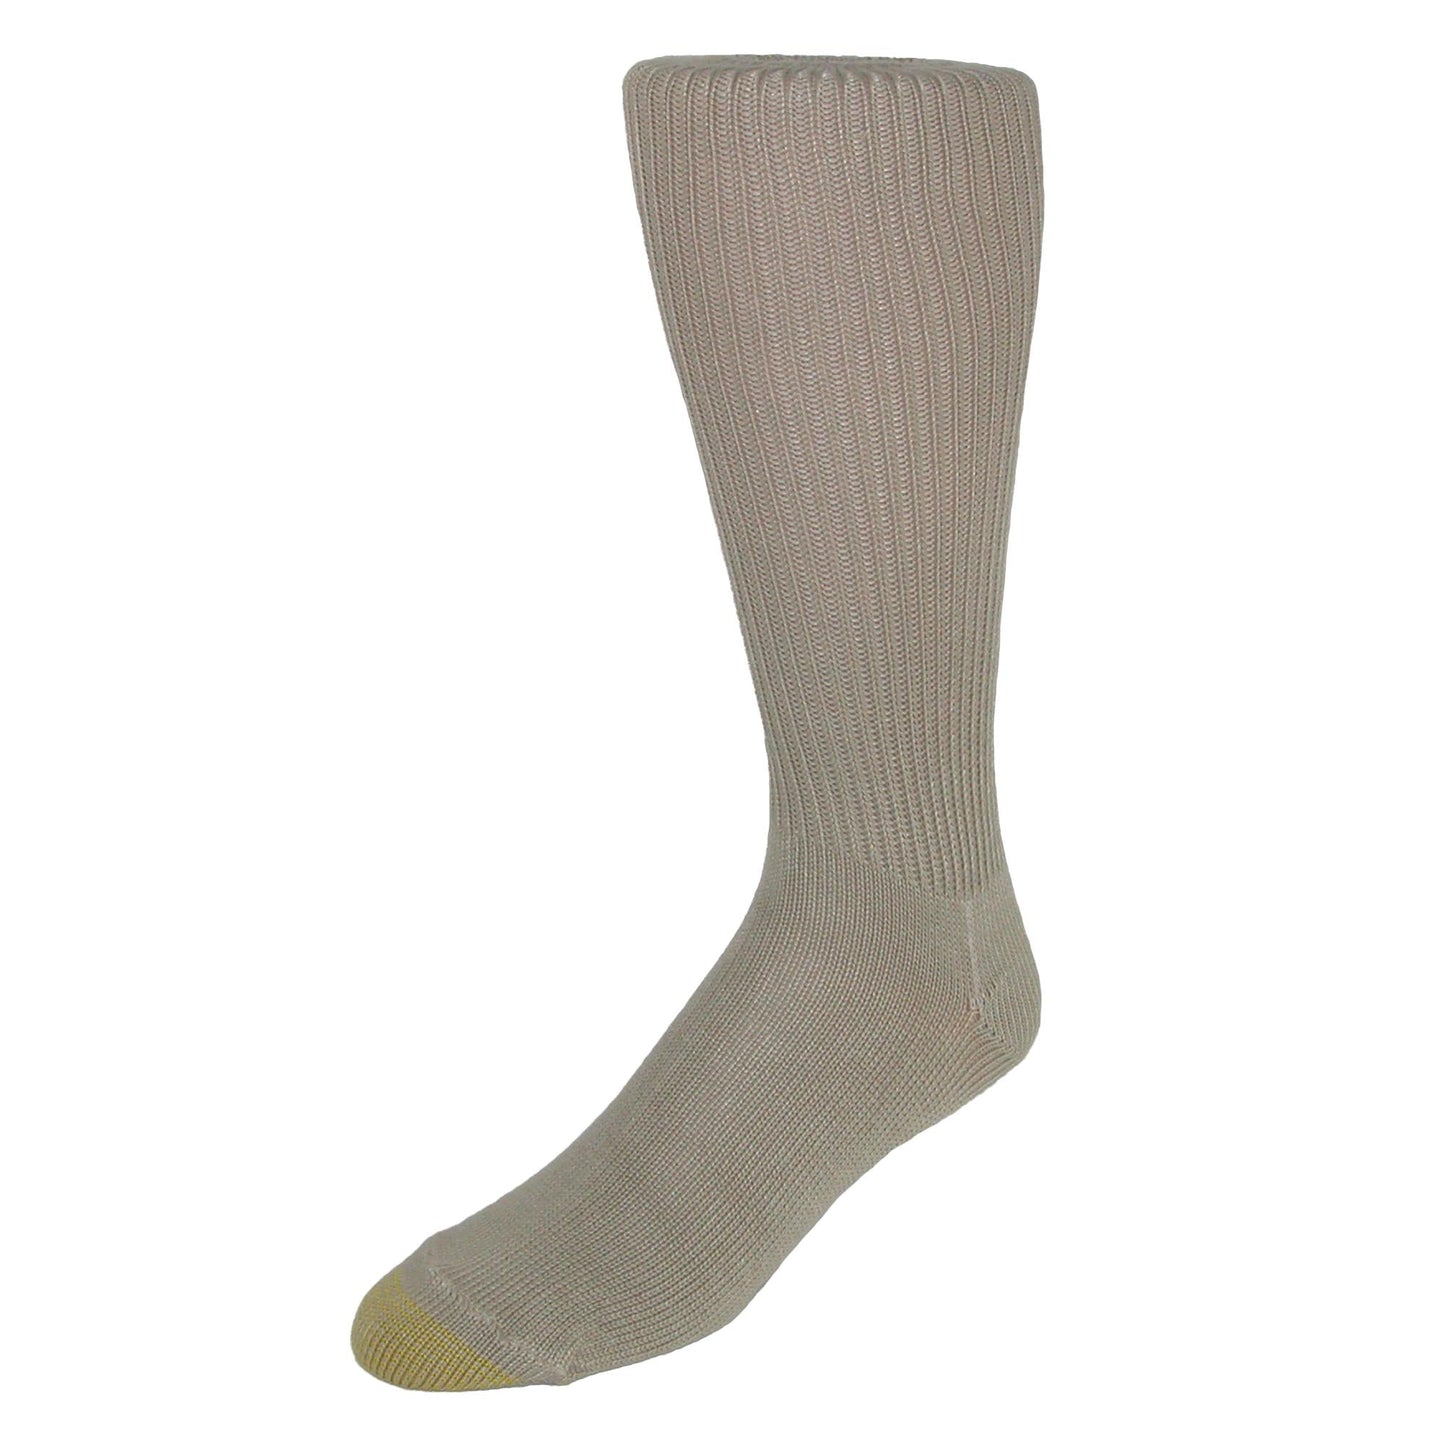 Gold Toe Men's Mid Calf Fluffies Socks (Pack of 3)